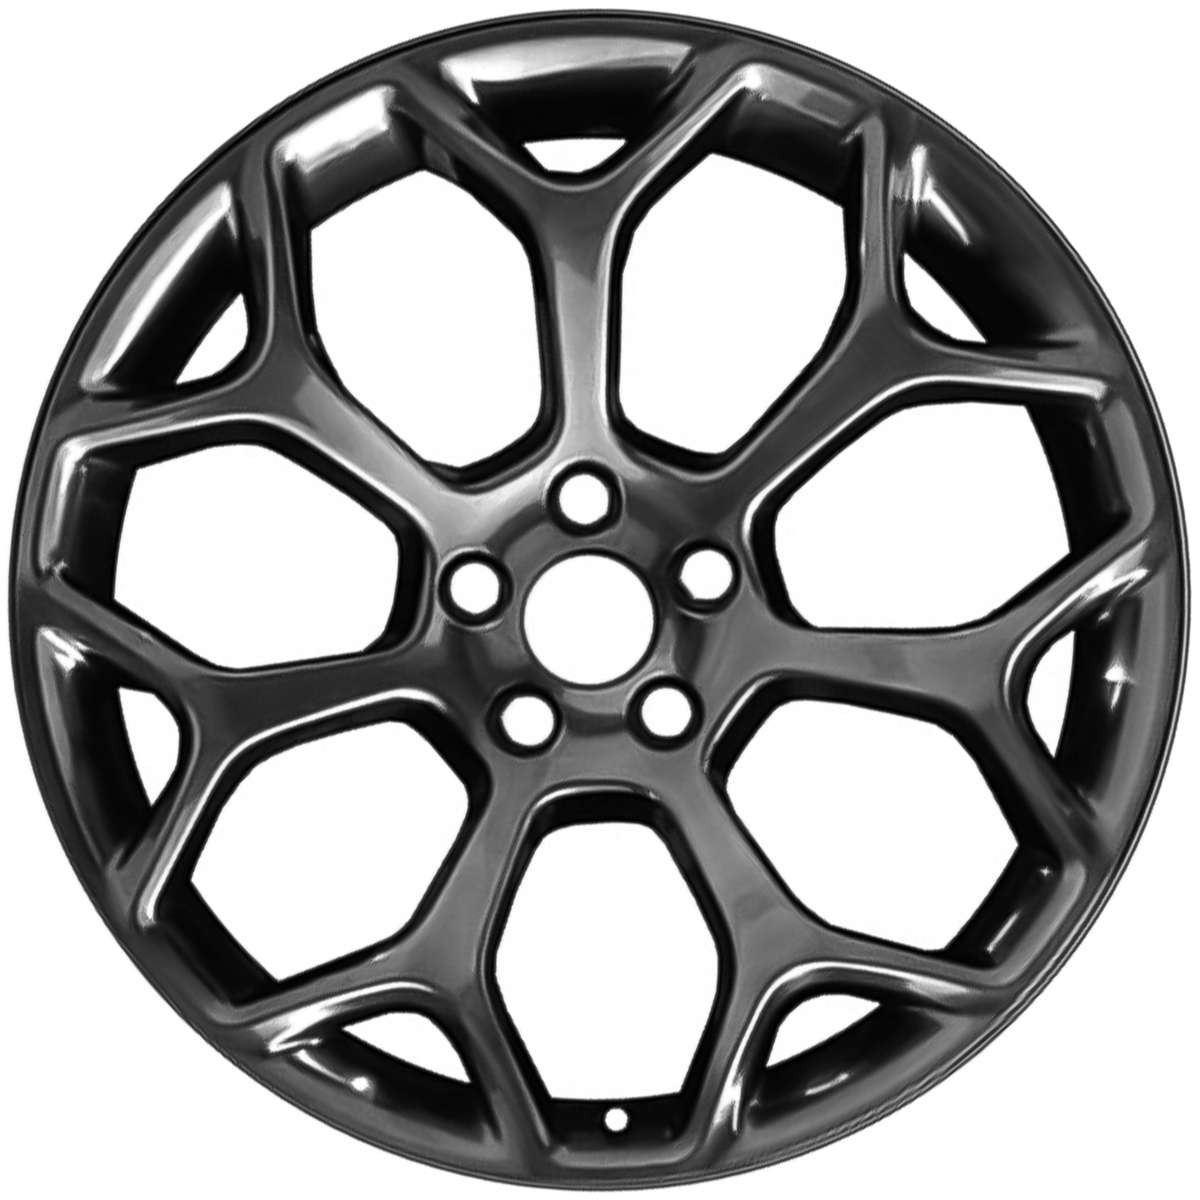 2018 Chrysler 300 19" OEM Wheel Rim W2537H